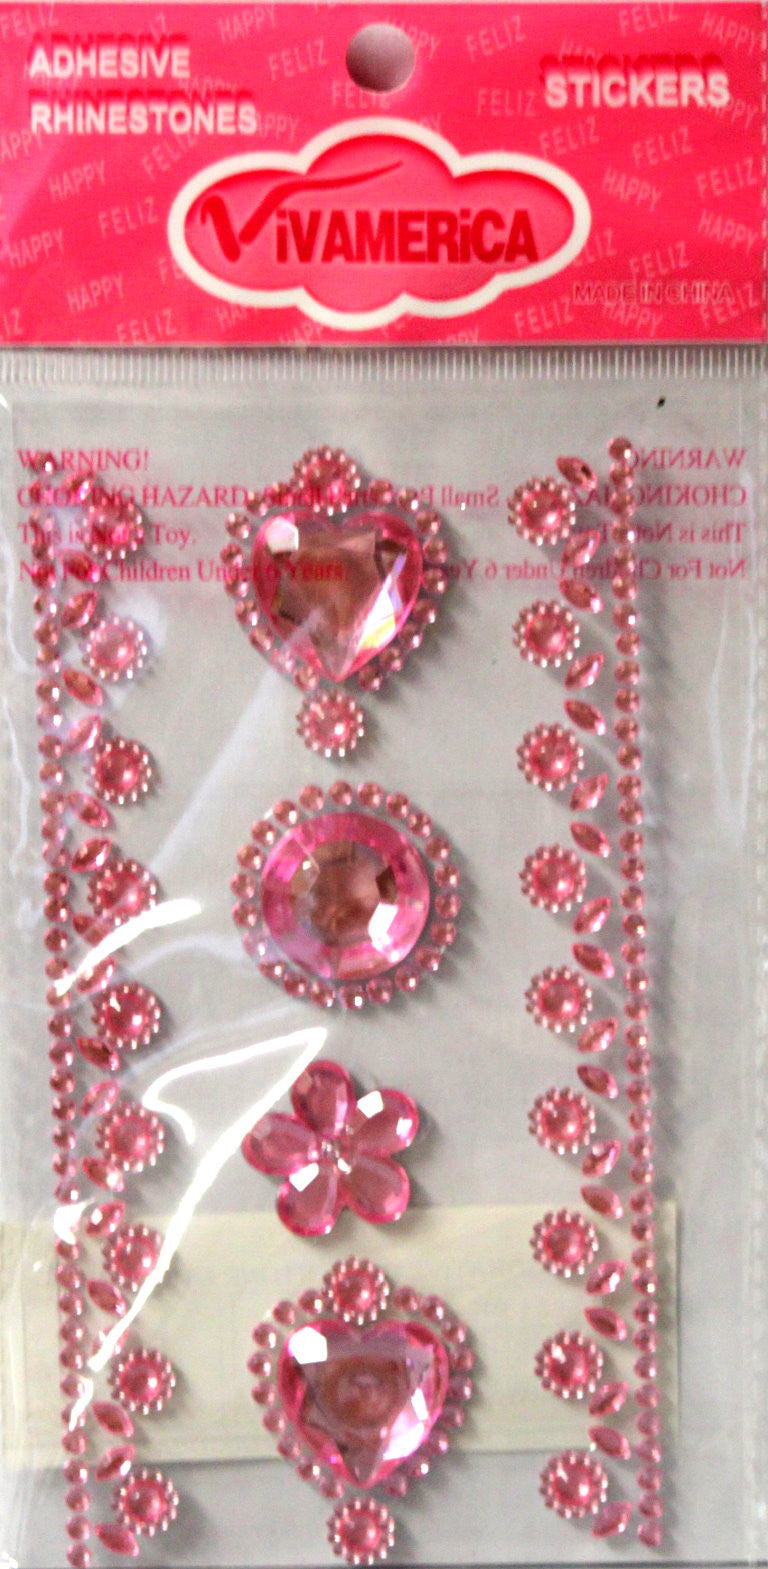 Vivamerica Self-Adhesive Pink Hearts Rhinestone Medley Embellishments